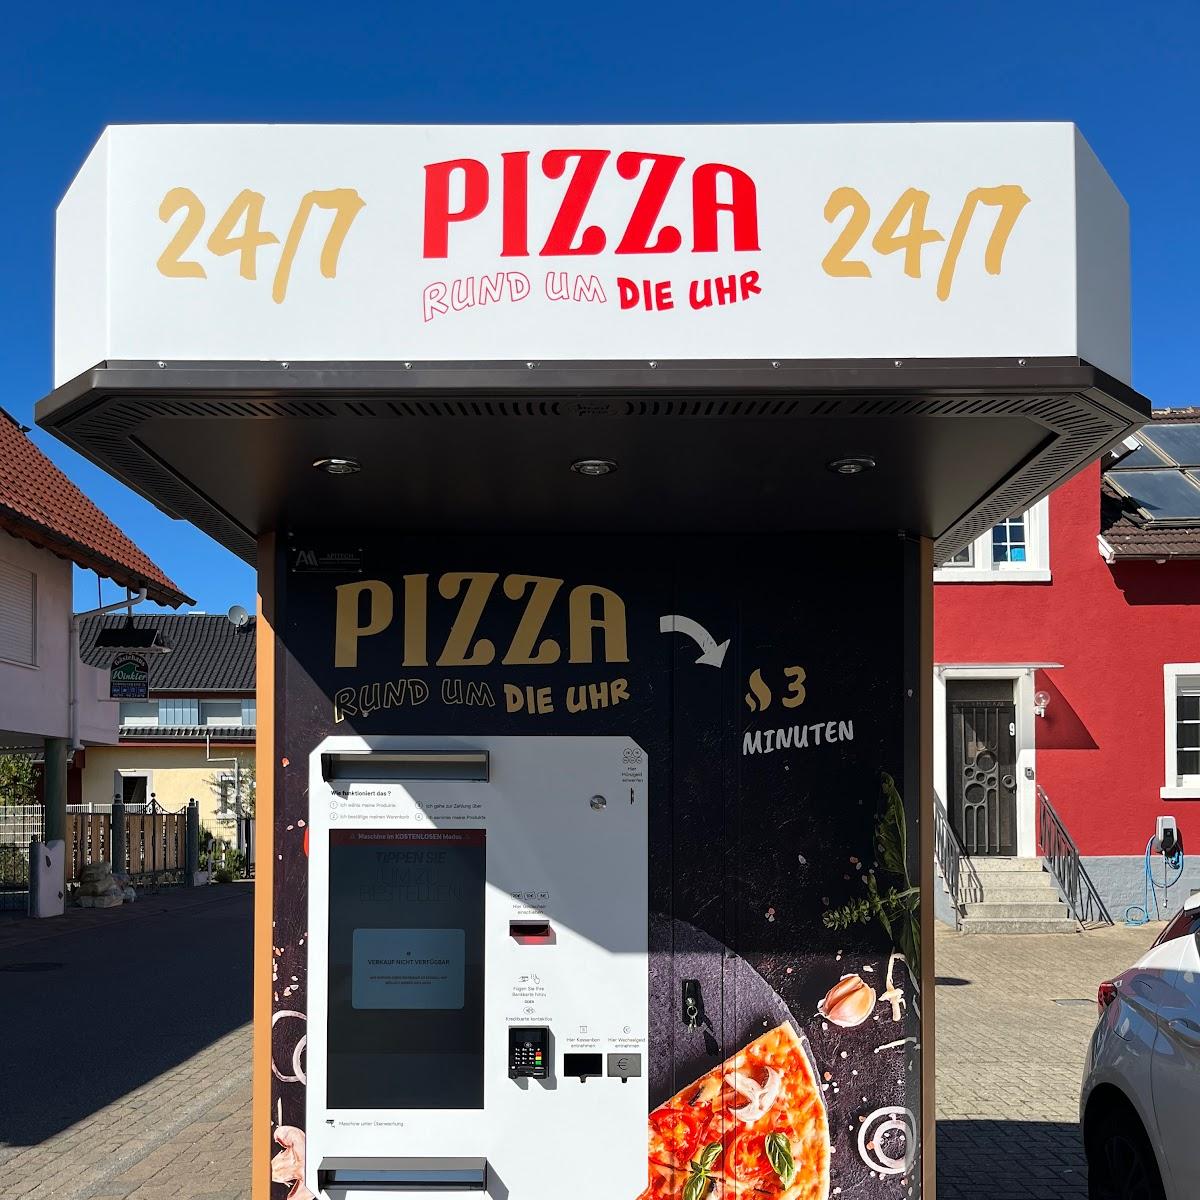 Restaurant "Pizza Automat" in Rust